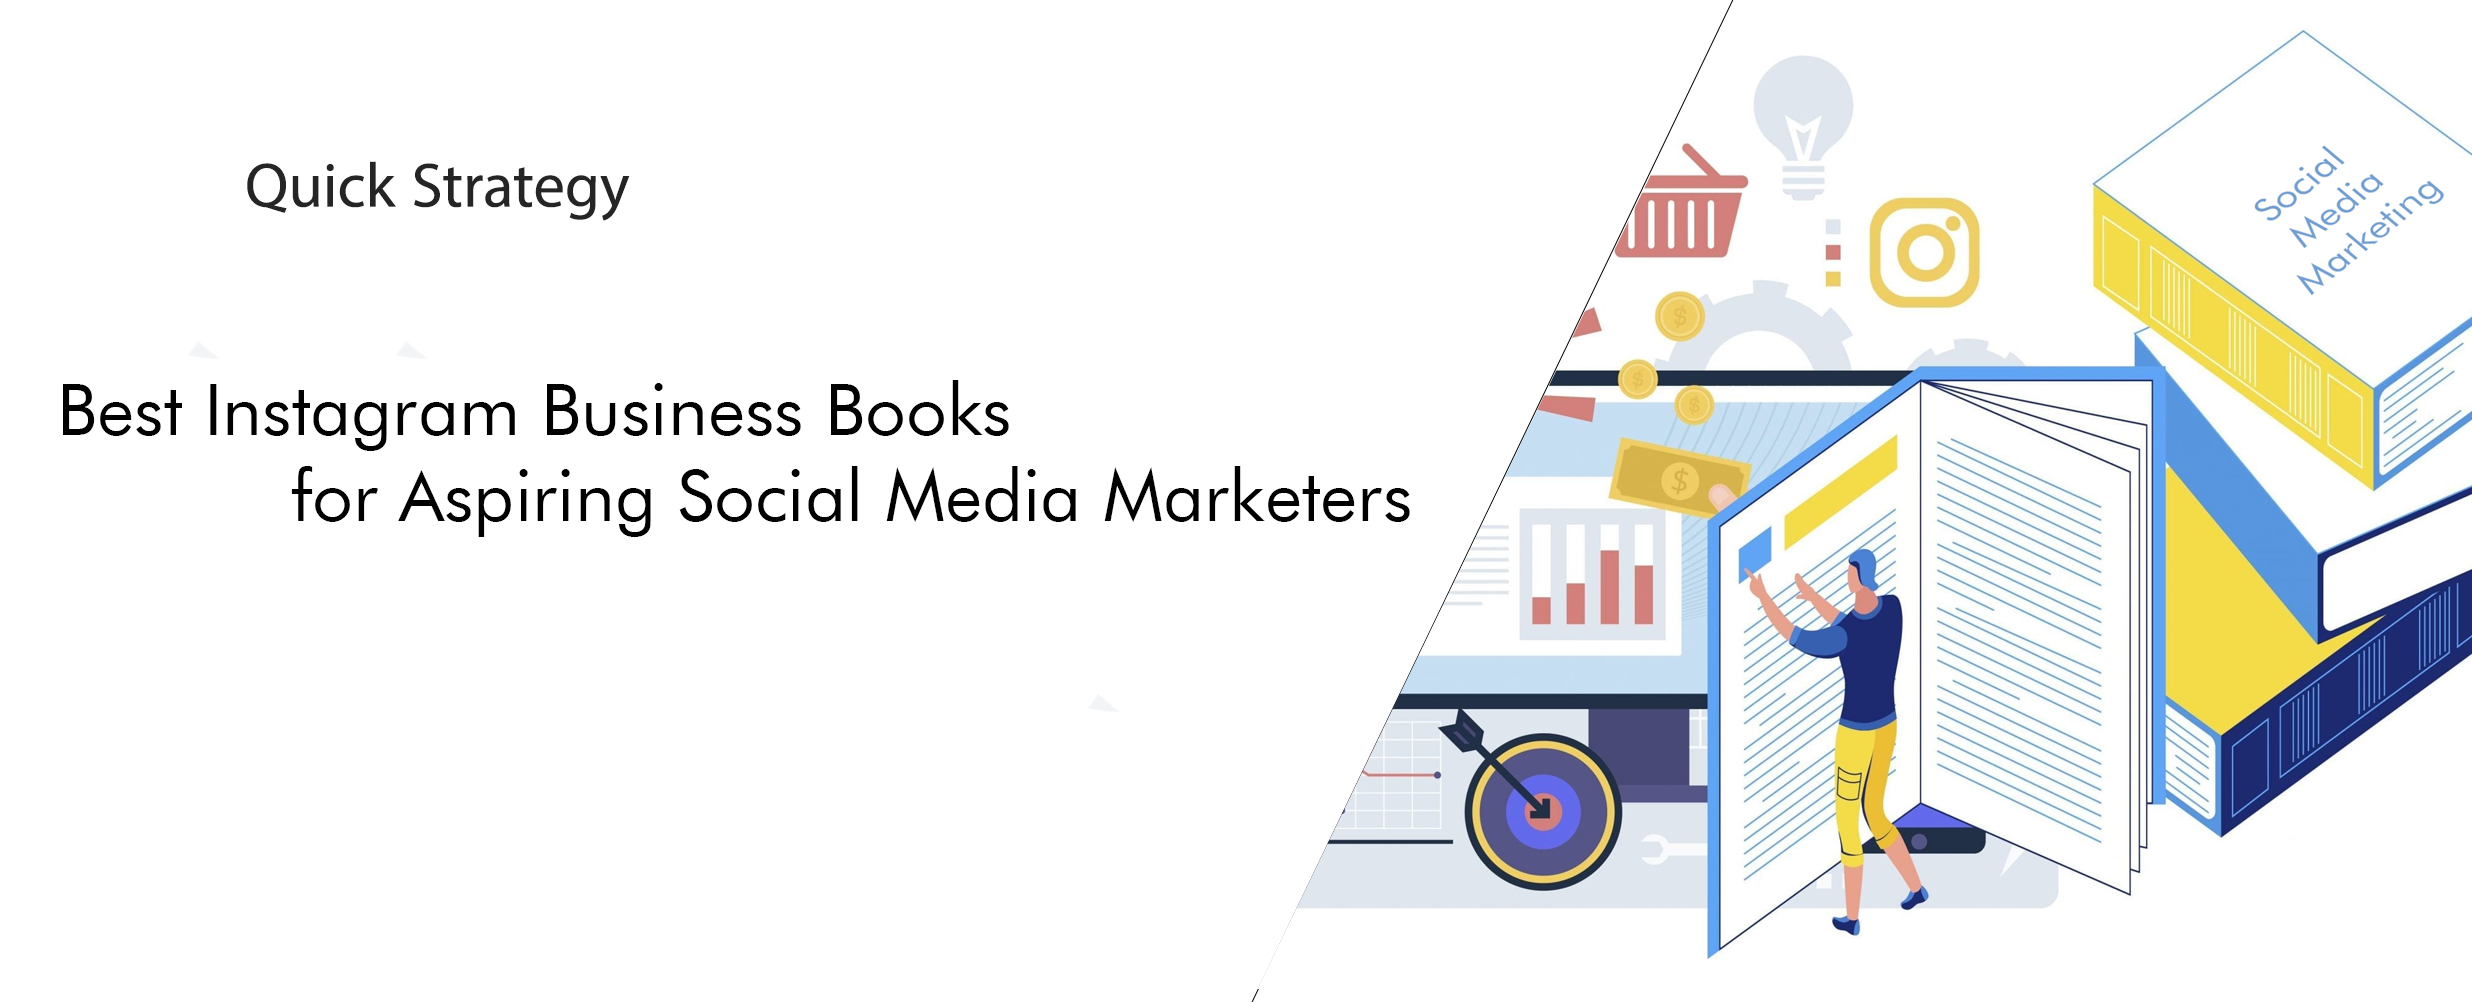 Top Books Every Aspiring Social Media Marketer Should Read